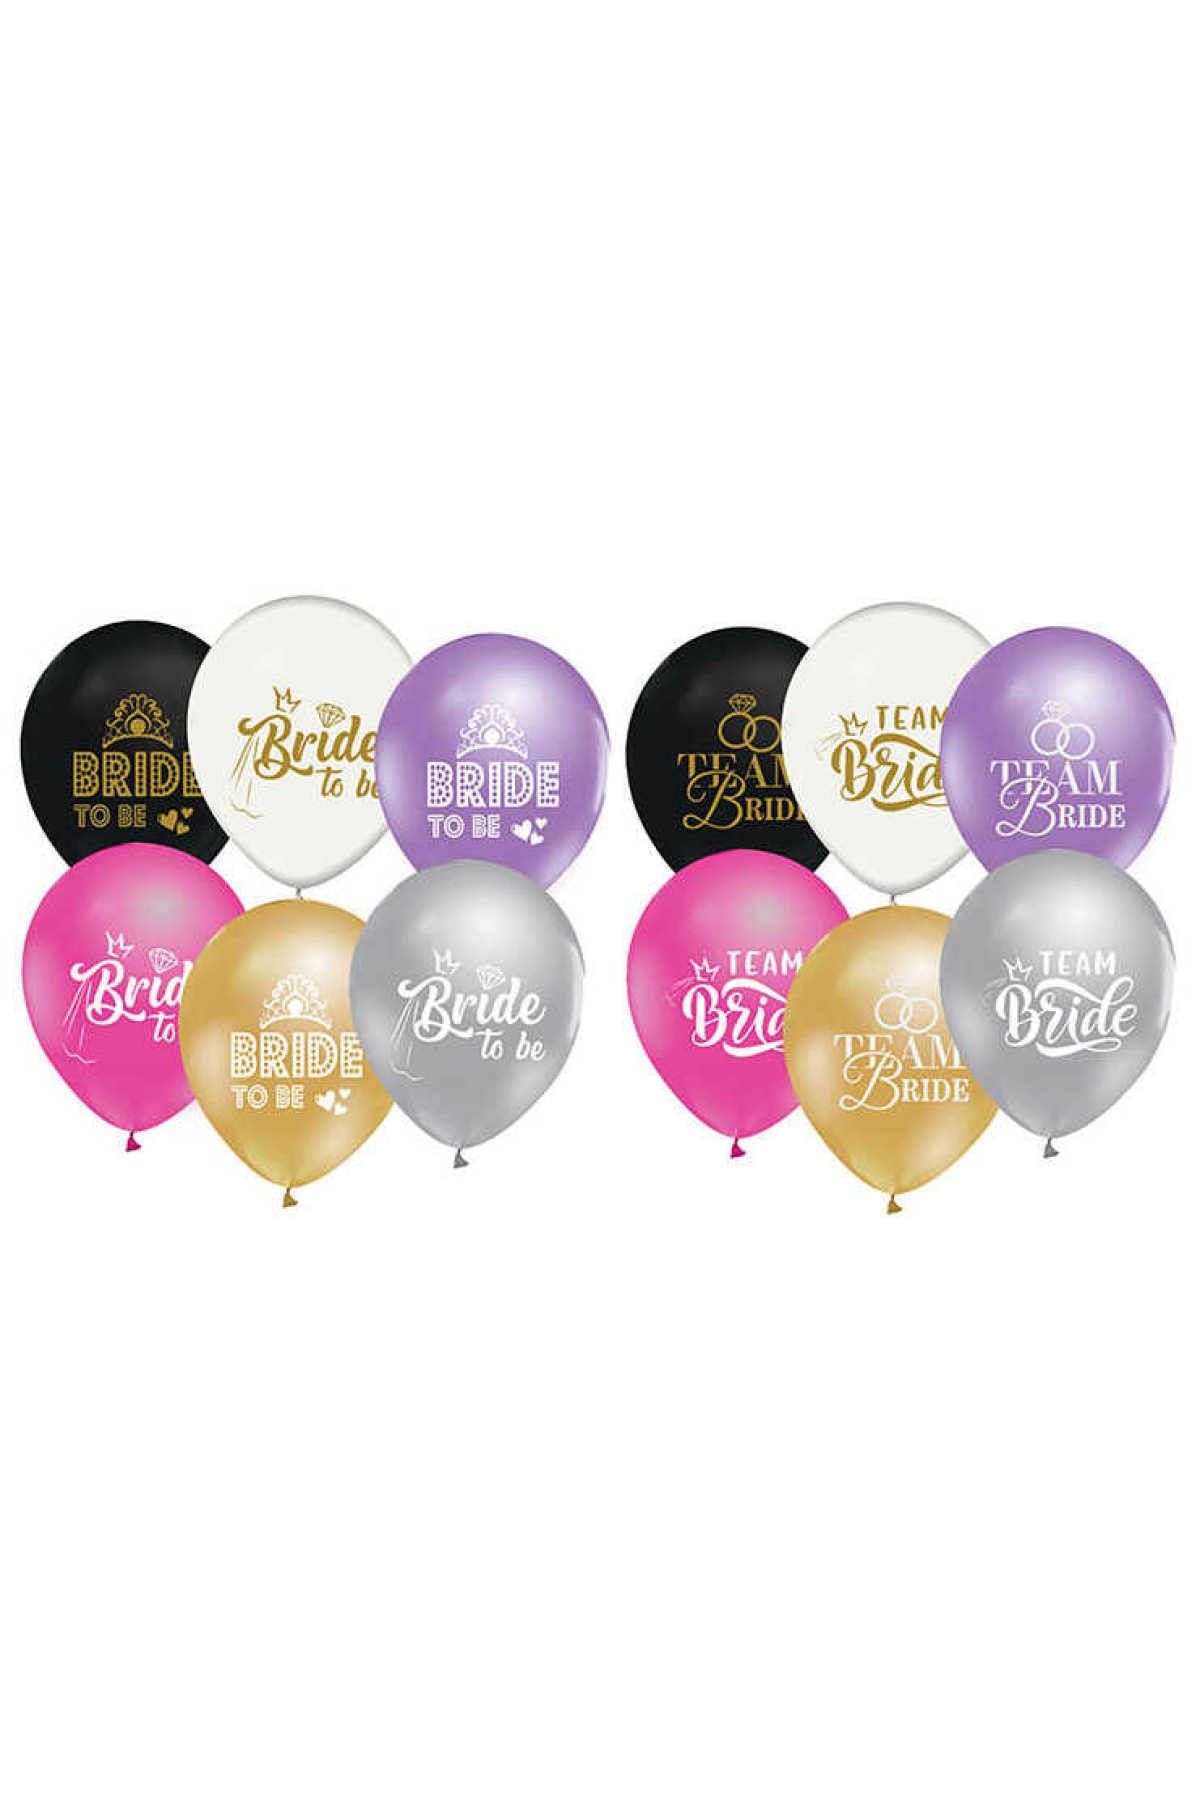 Huzur Party Store Bride To Be Team Bride Yazılı 10 Adet Balon Renkli Bekarlığa Veda Partisi Temalı Balon Konsept